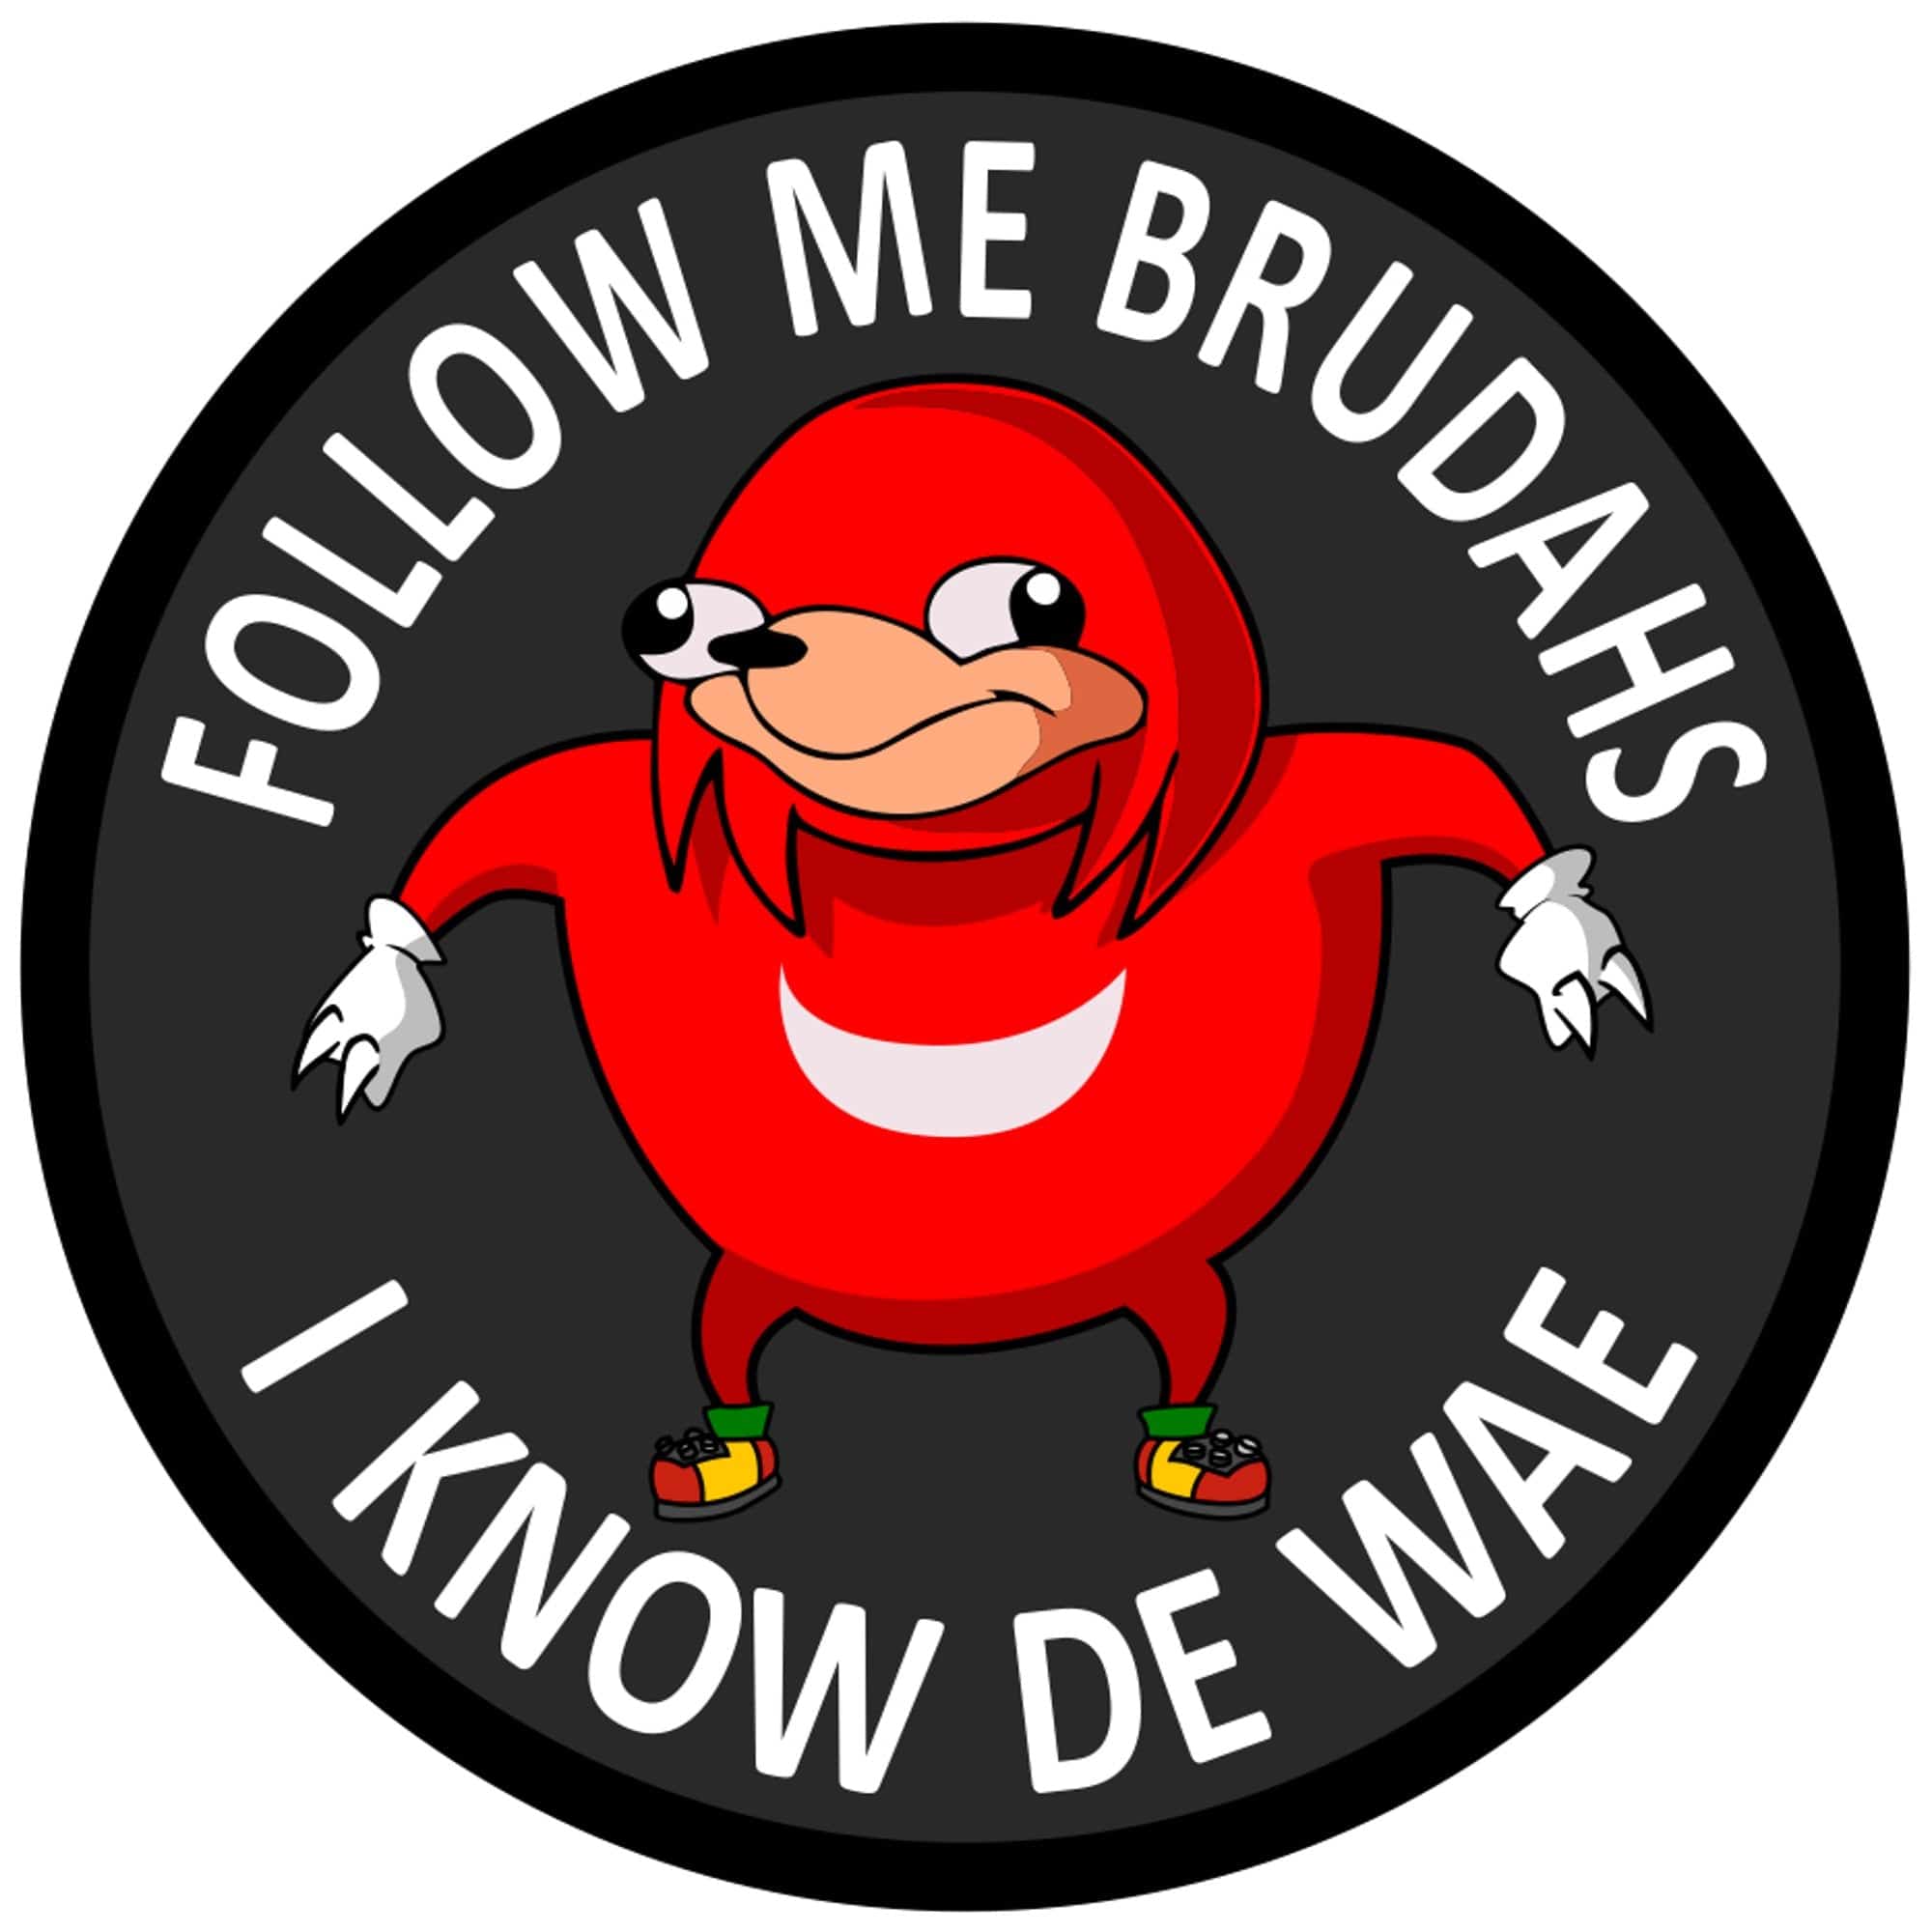 Tactical Gear Junkie Stickers Follow Me Brudahs I Know The Wae - Ugandan Knuckles - 3 inch Sticker